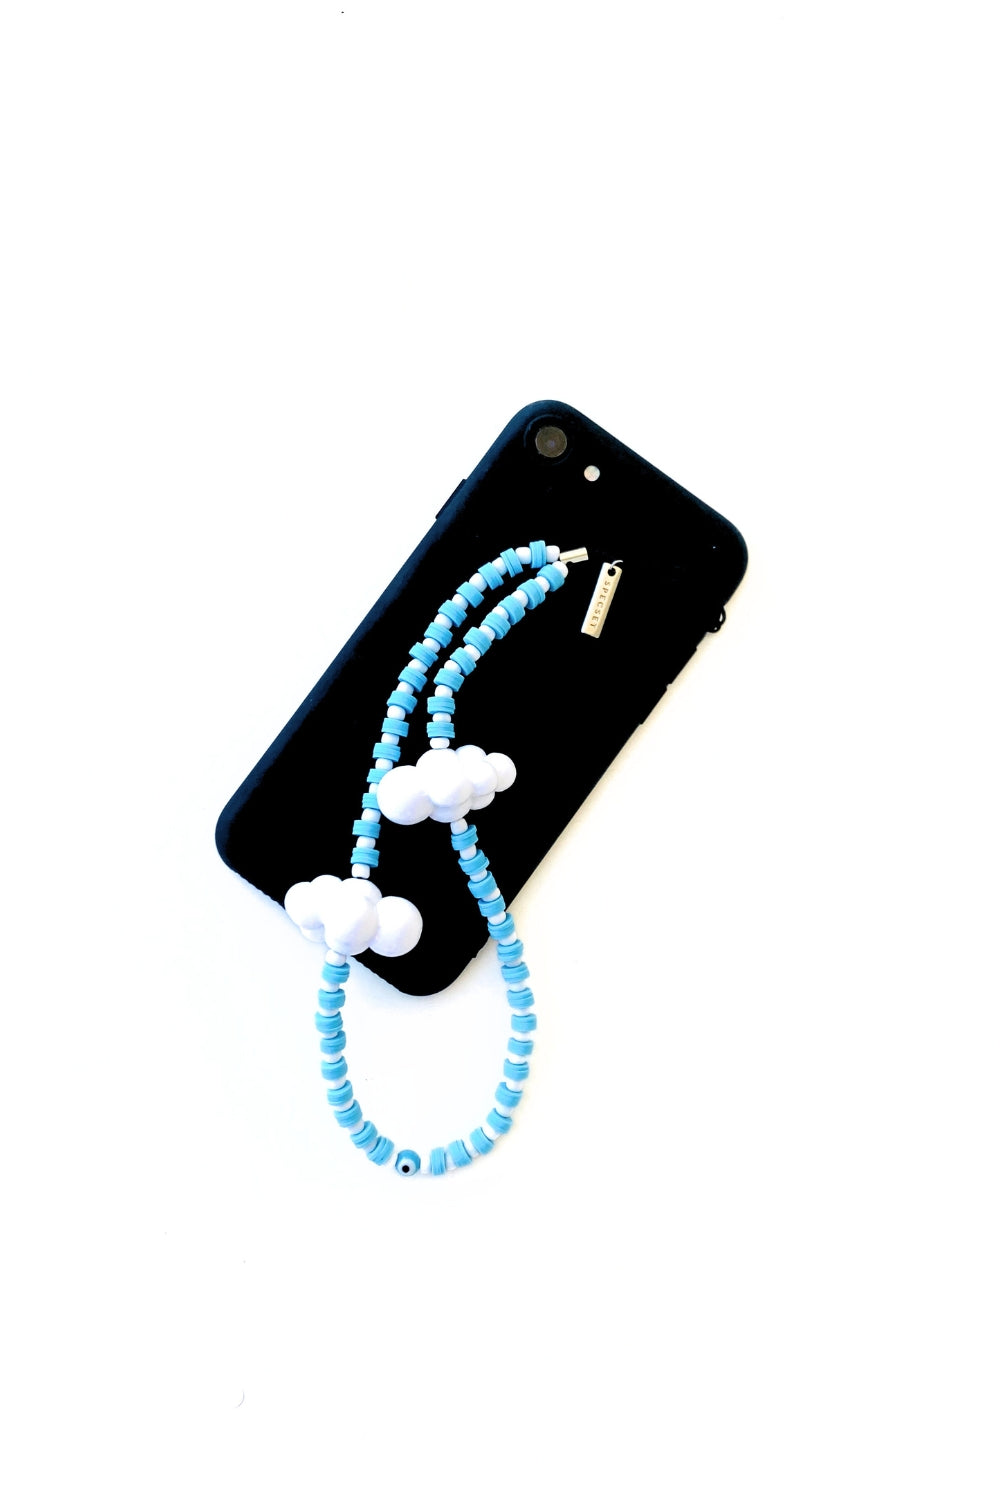 DAILY SKY - BLUE Wrist Phone Strap | SPECSET